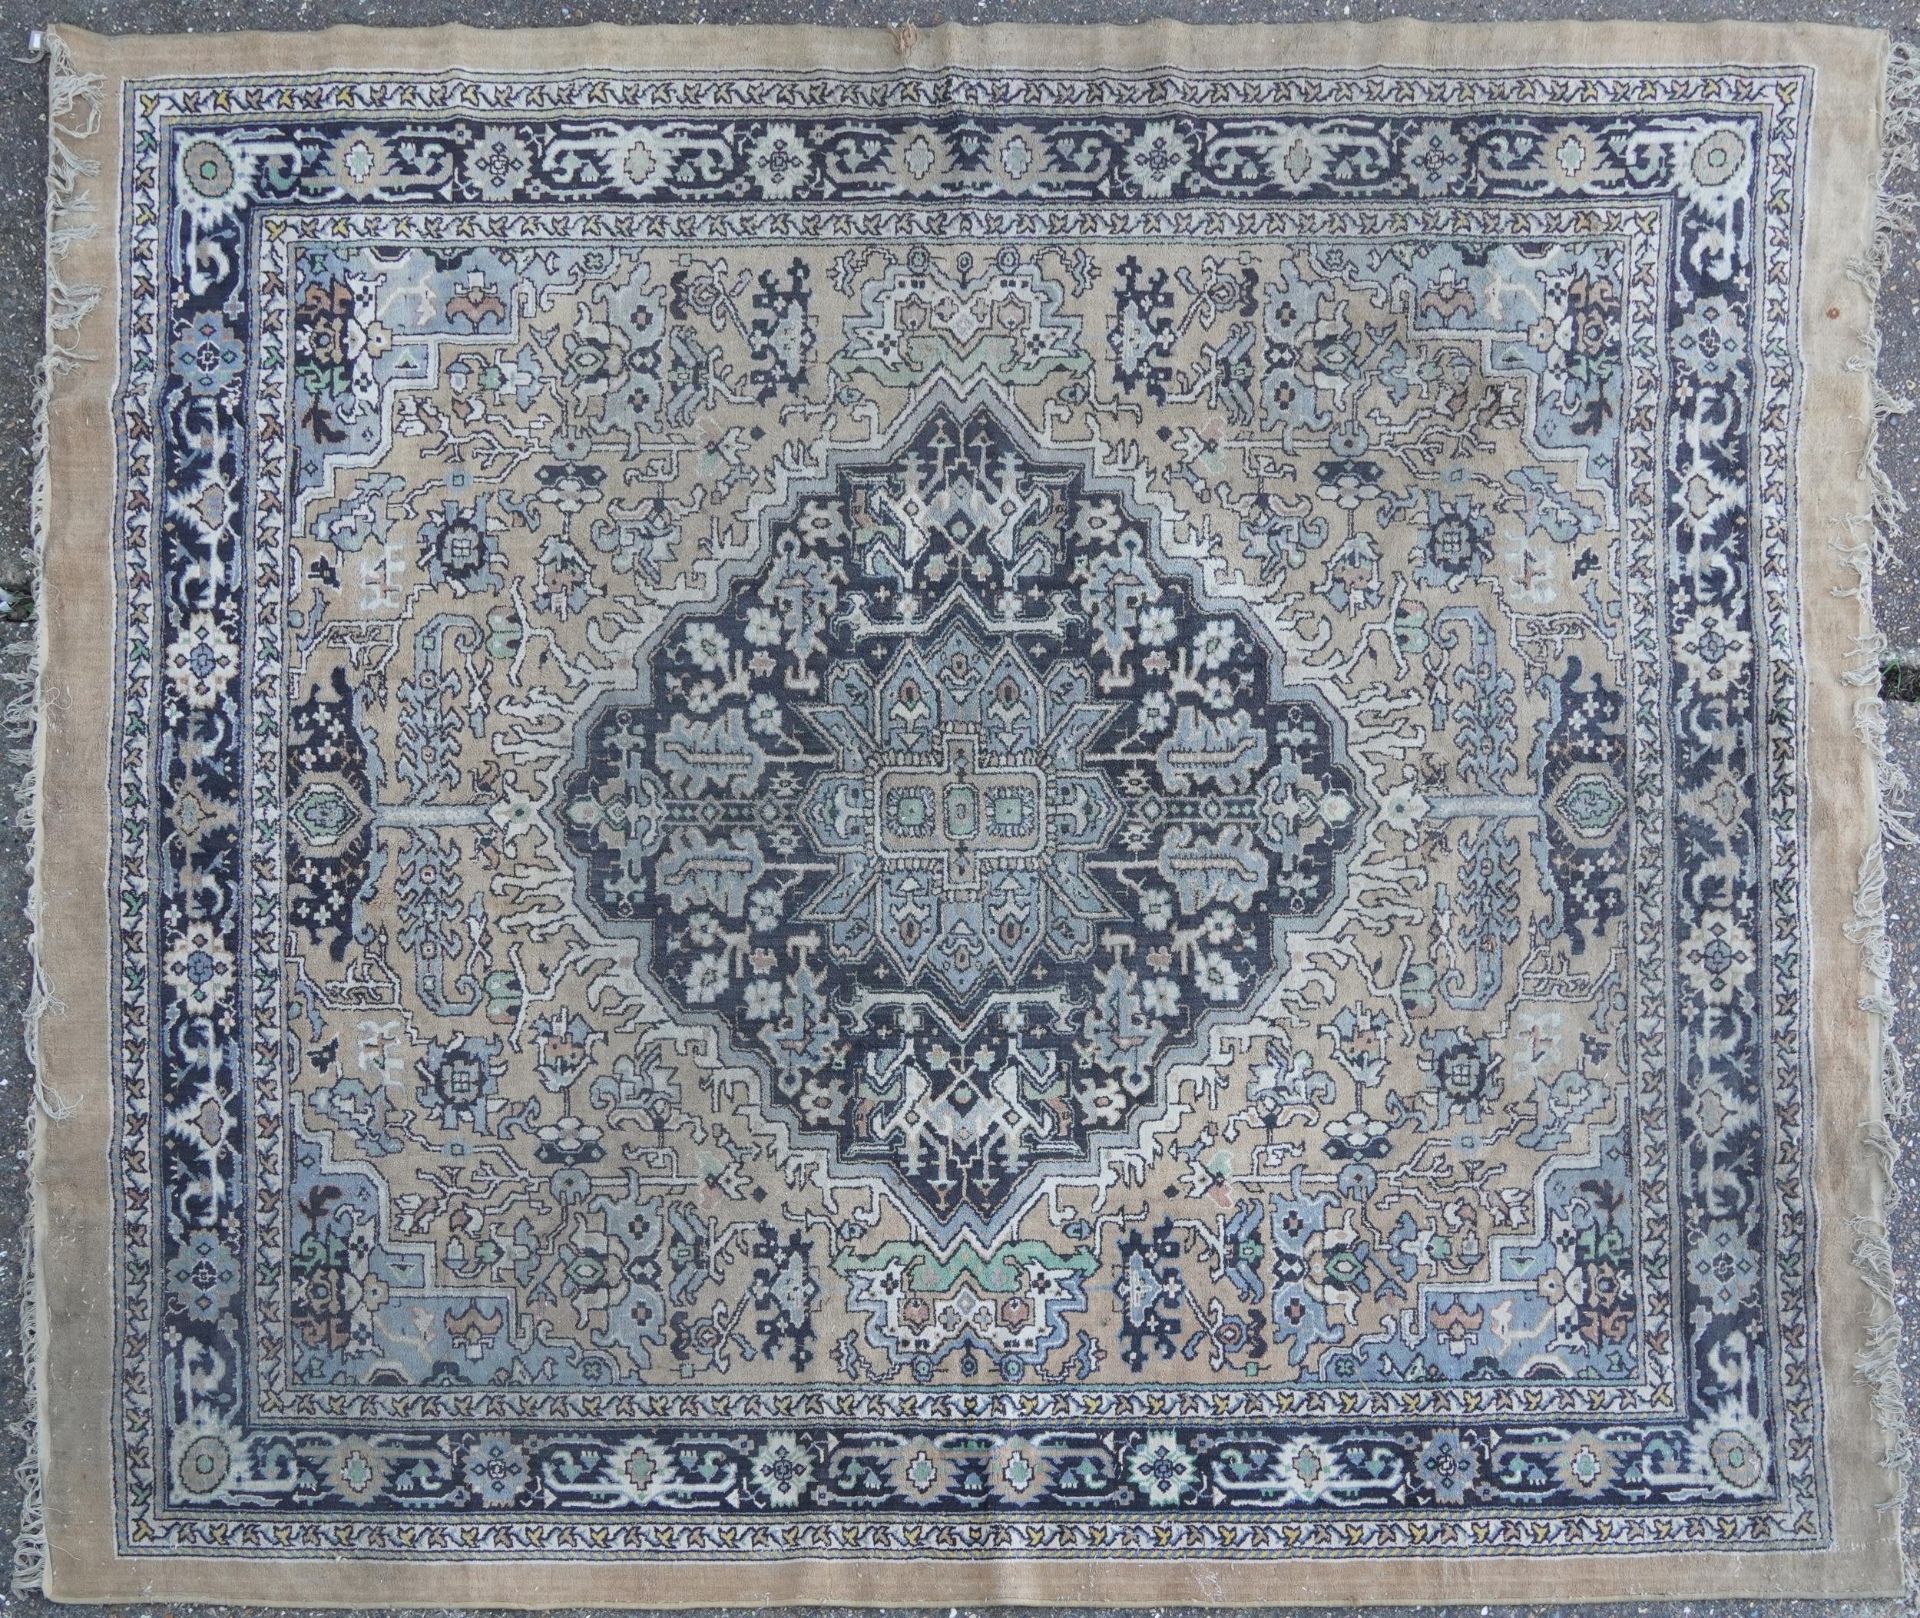 Rectangular Persian carpet having an allover floral design onto a brown ground, 310cm x 265cm